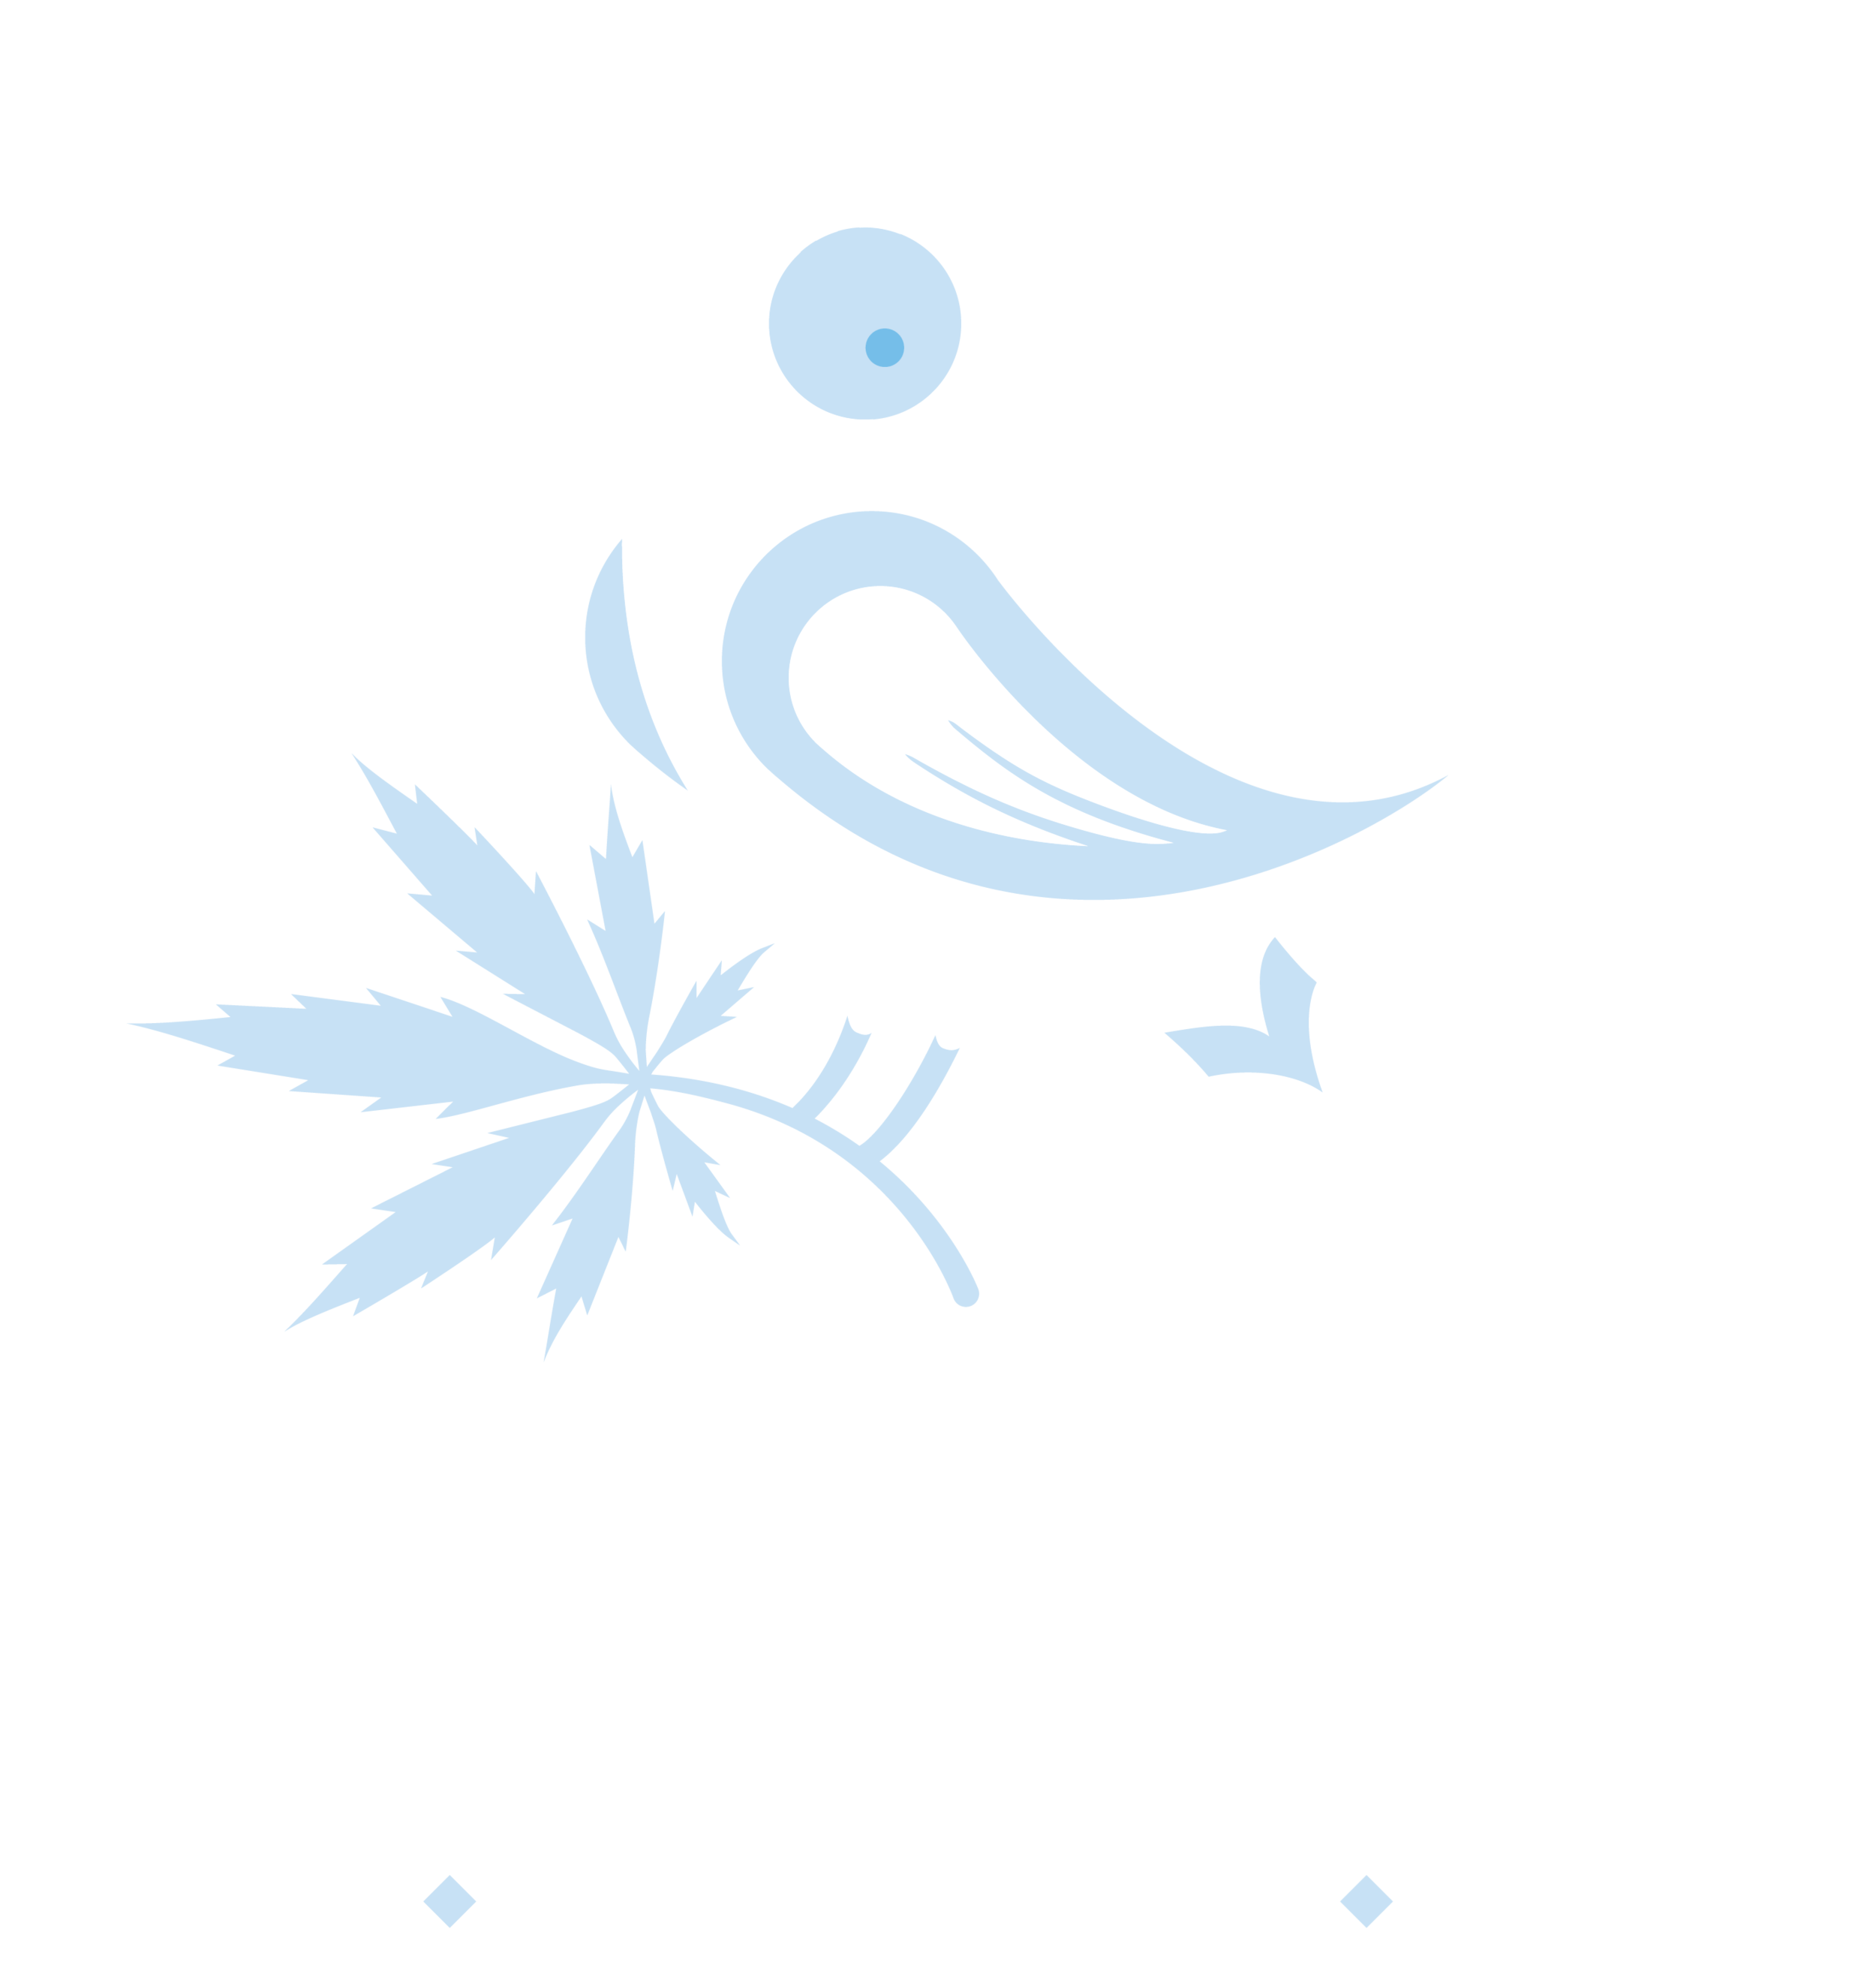 FENARIO FARMS